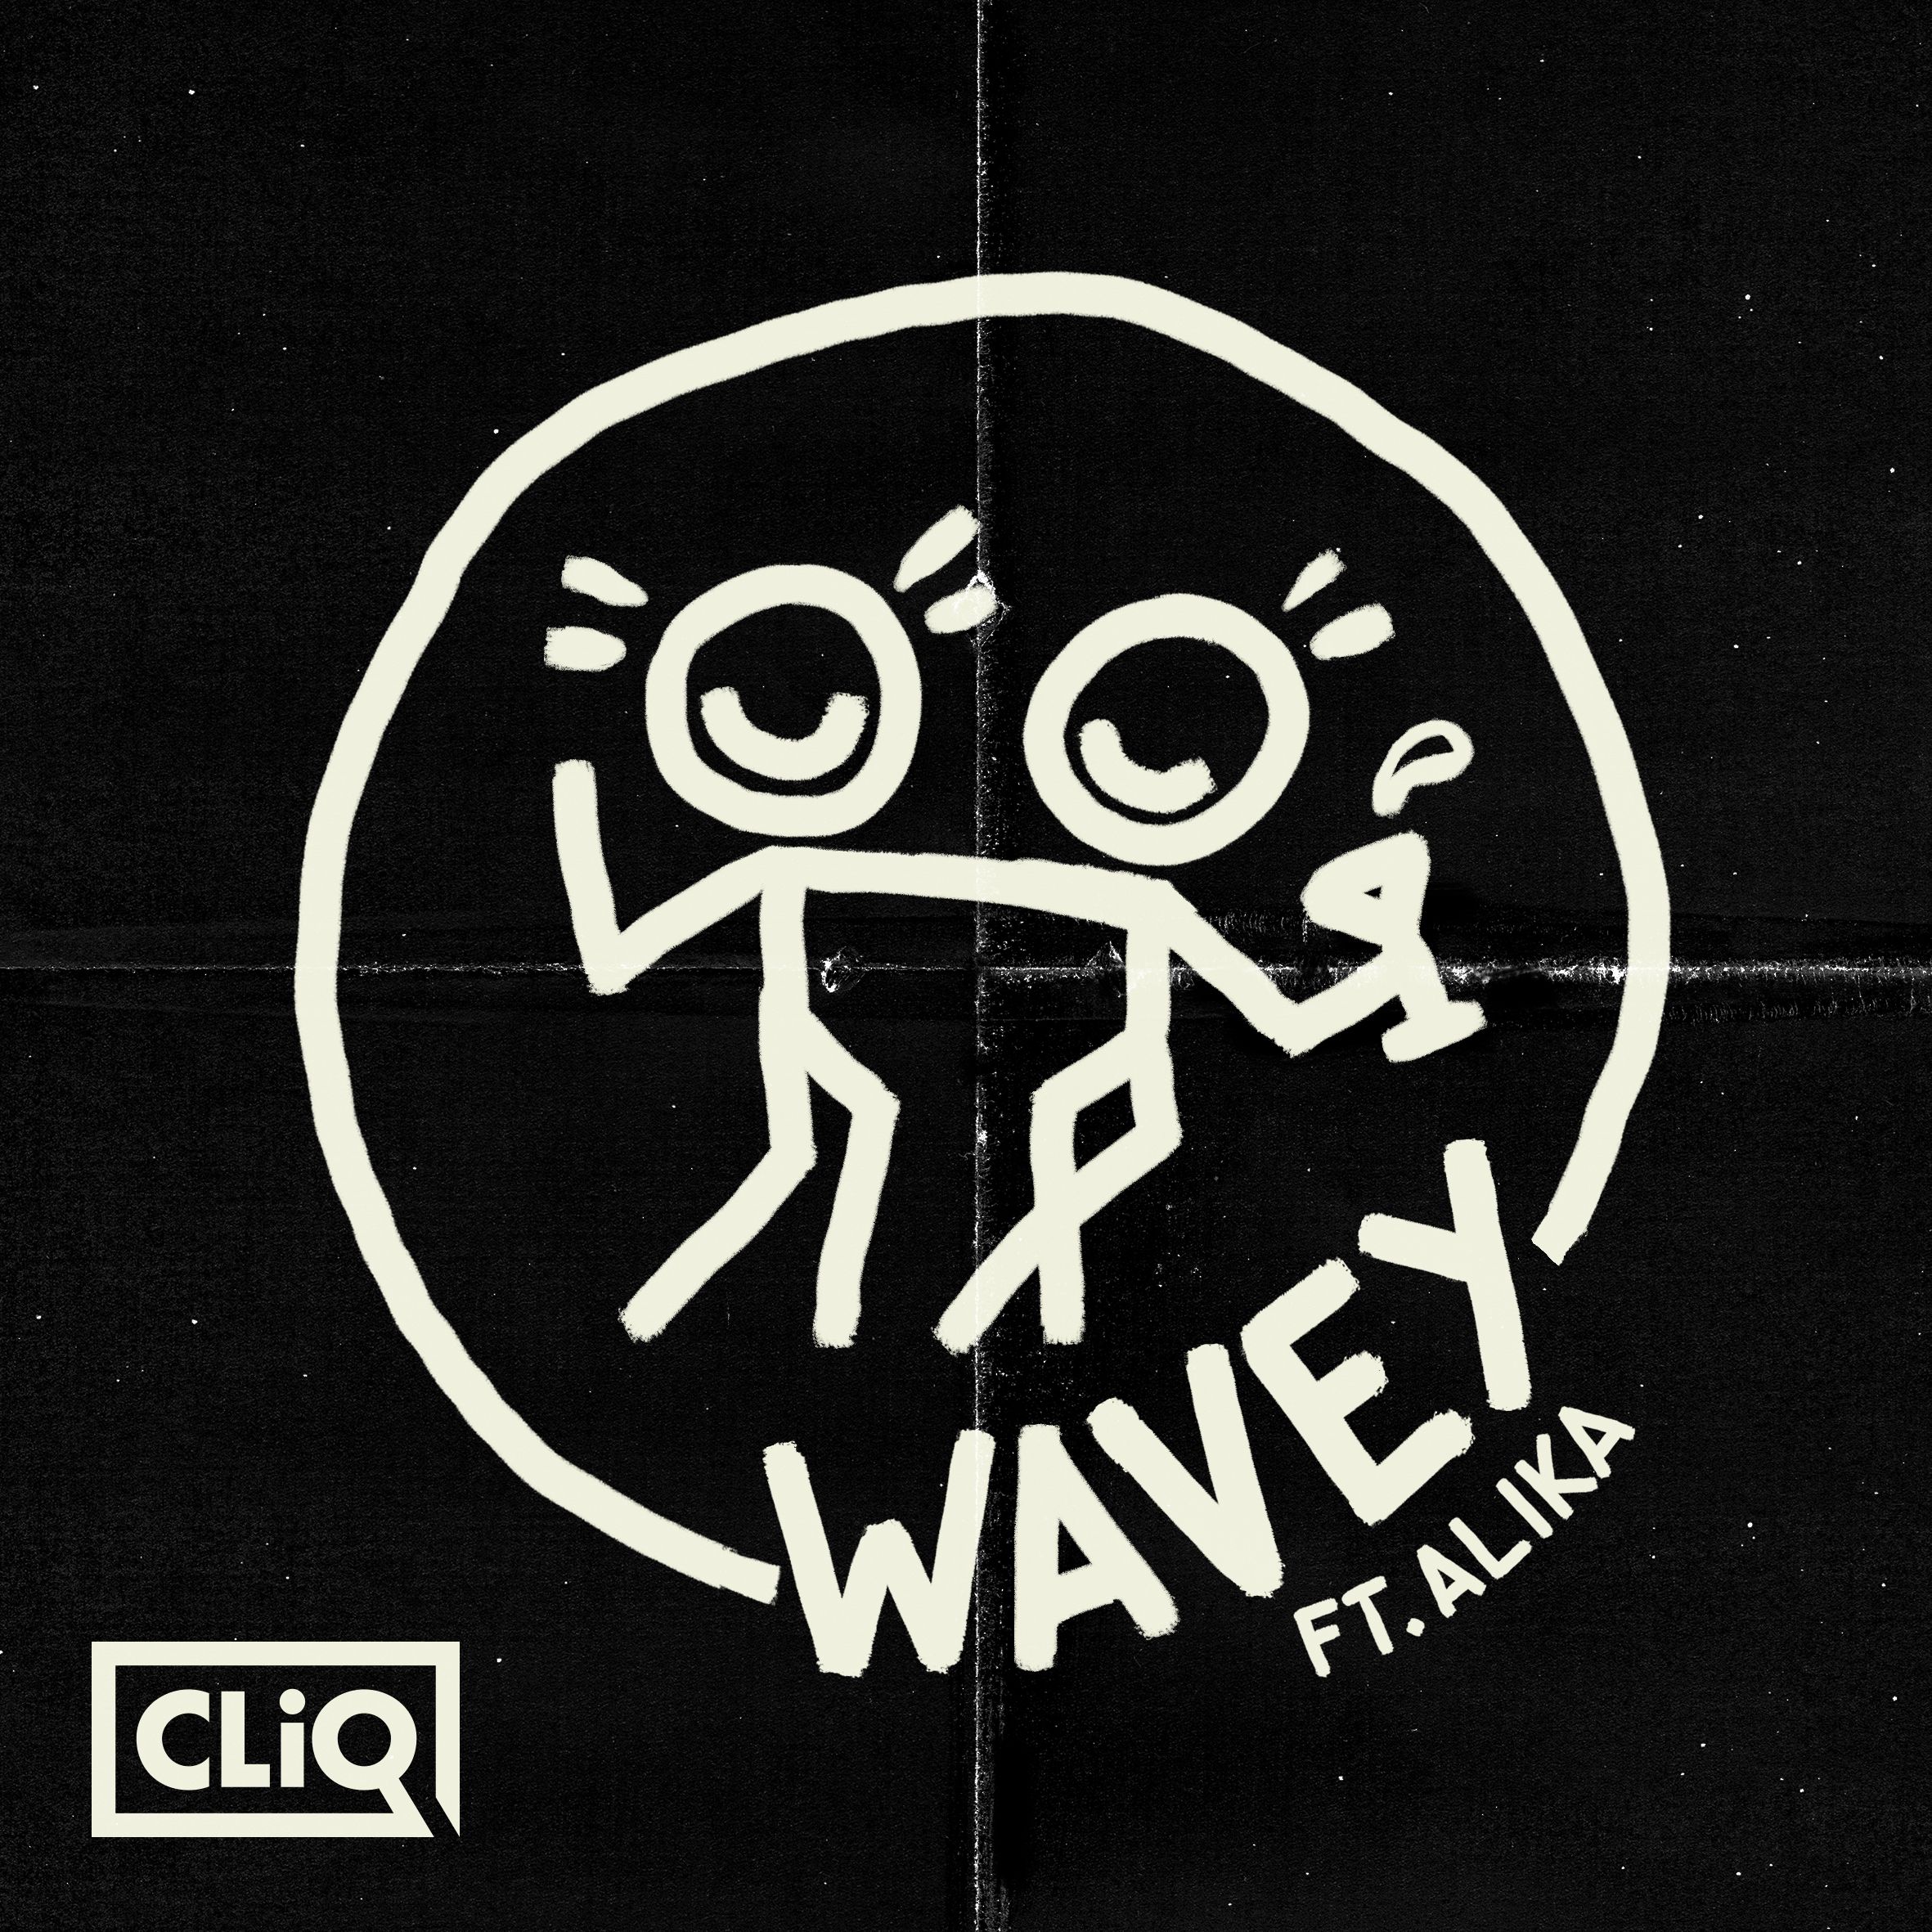 cliq_-_wavey_-_ep_remix_-_blk.jpg